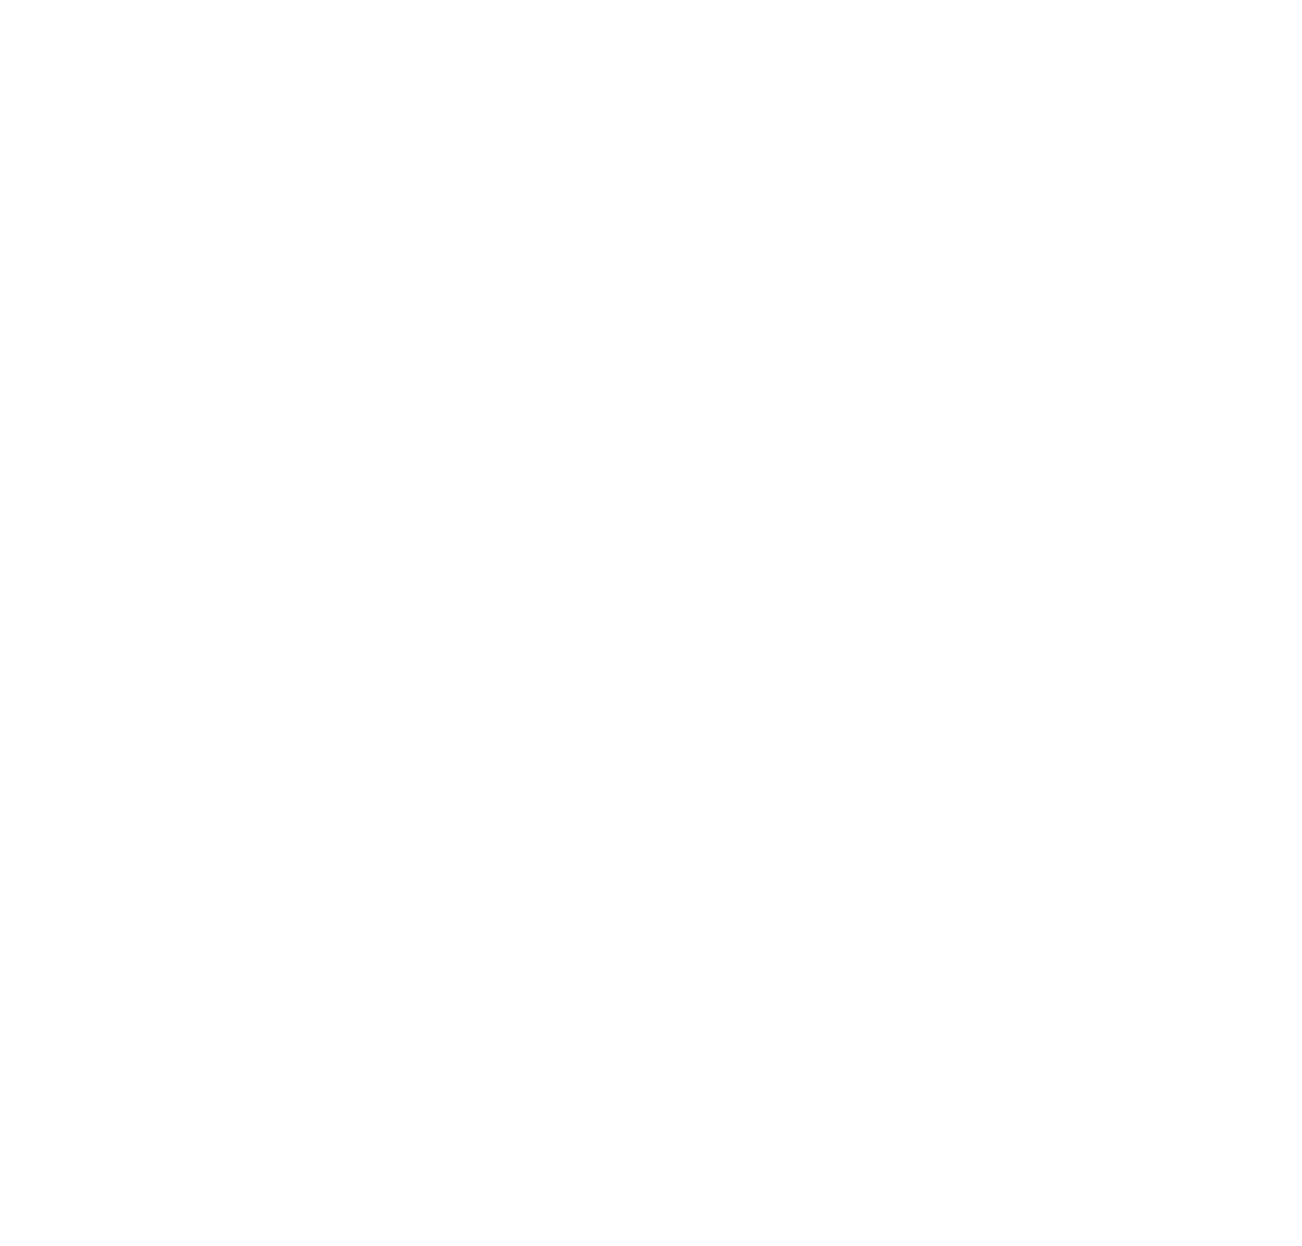 Space Concordia